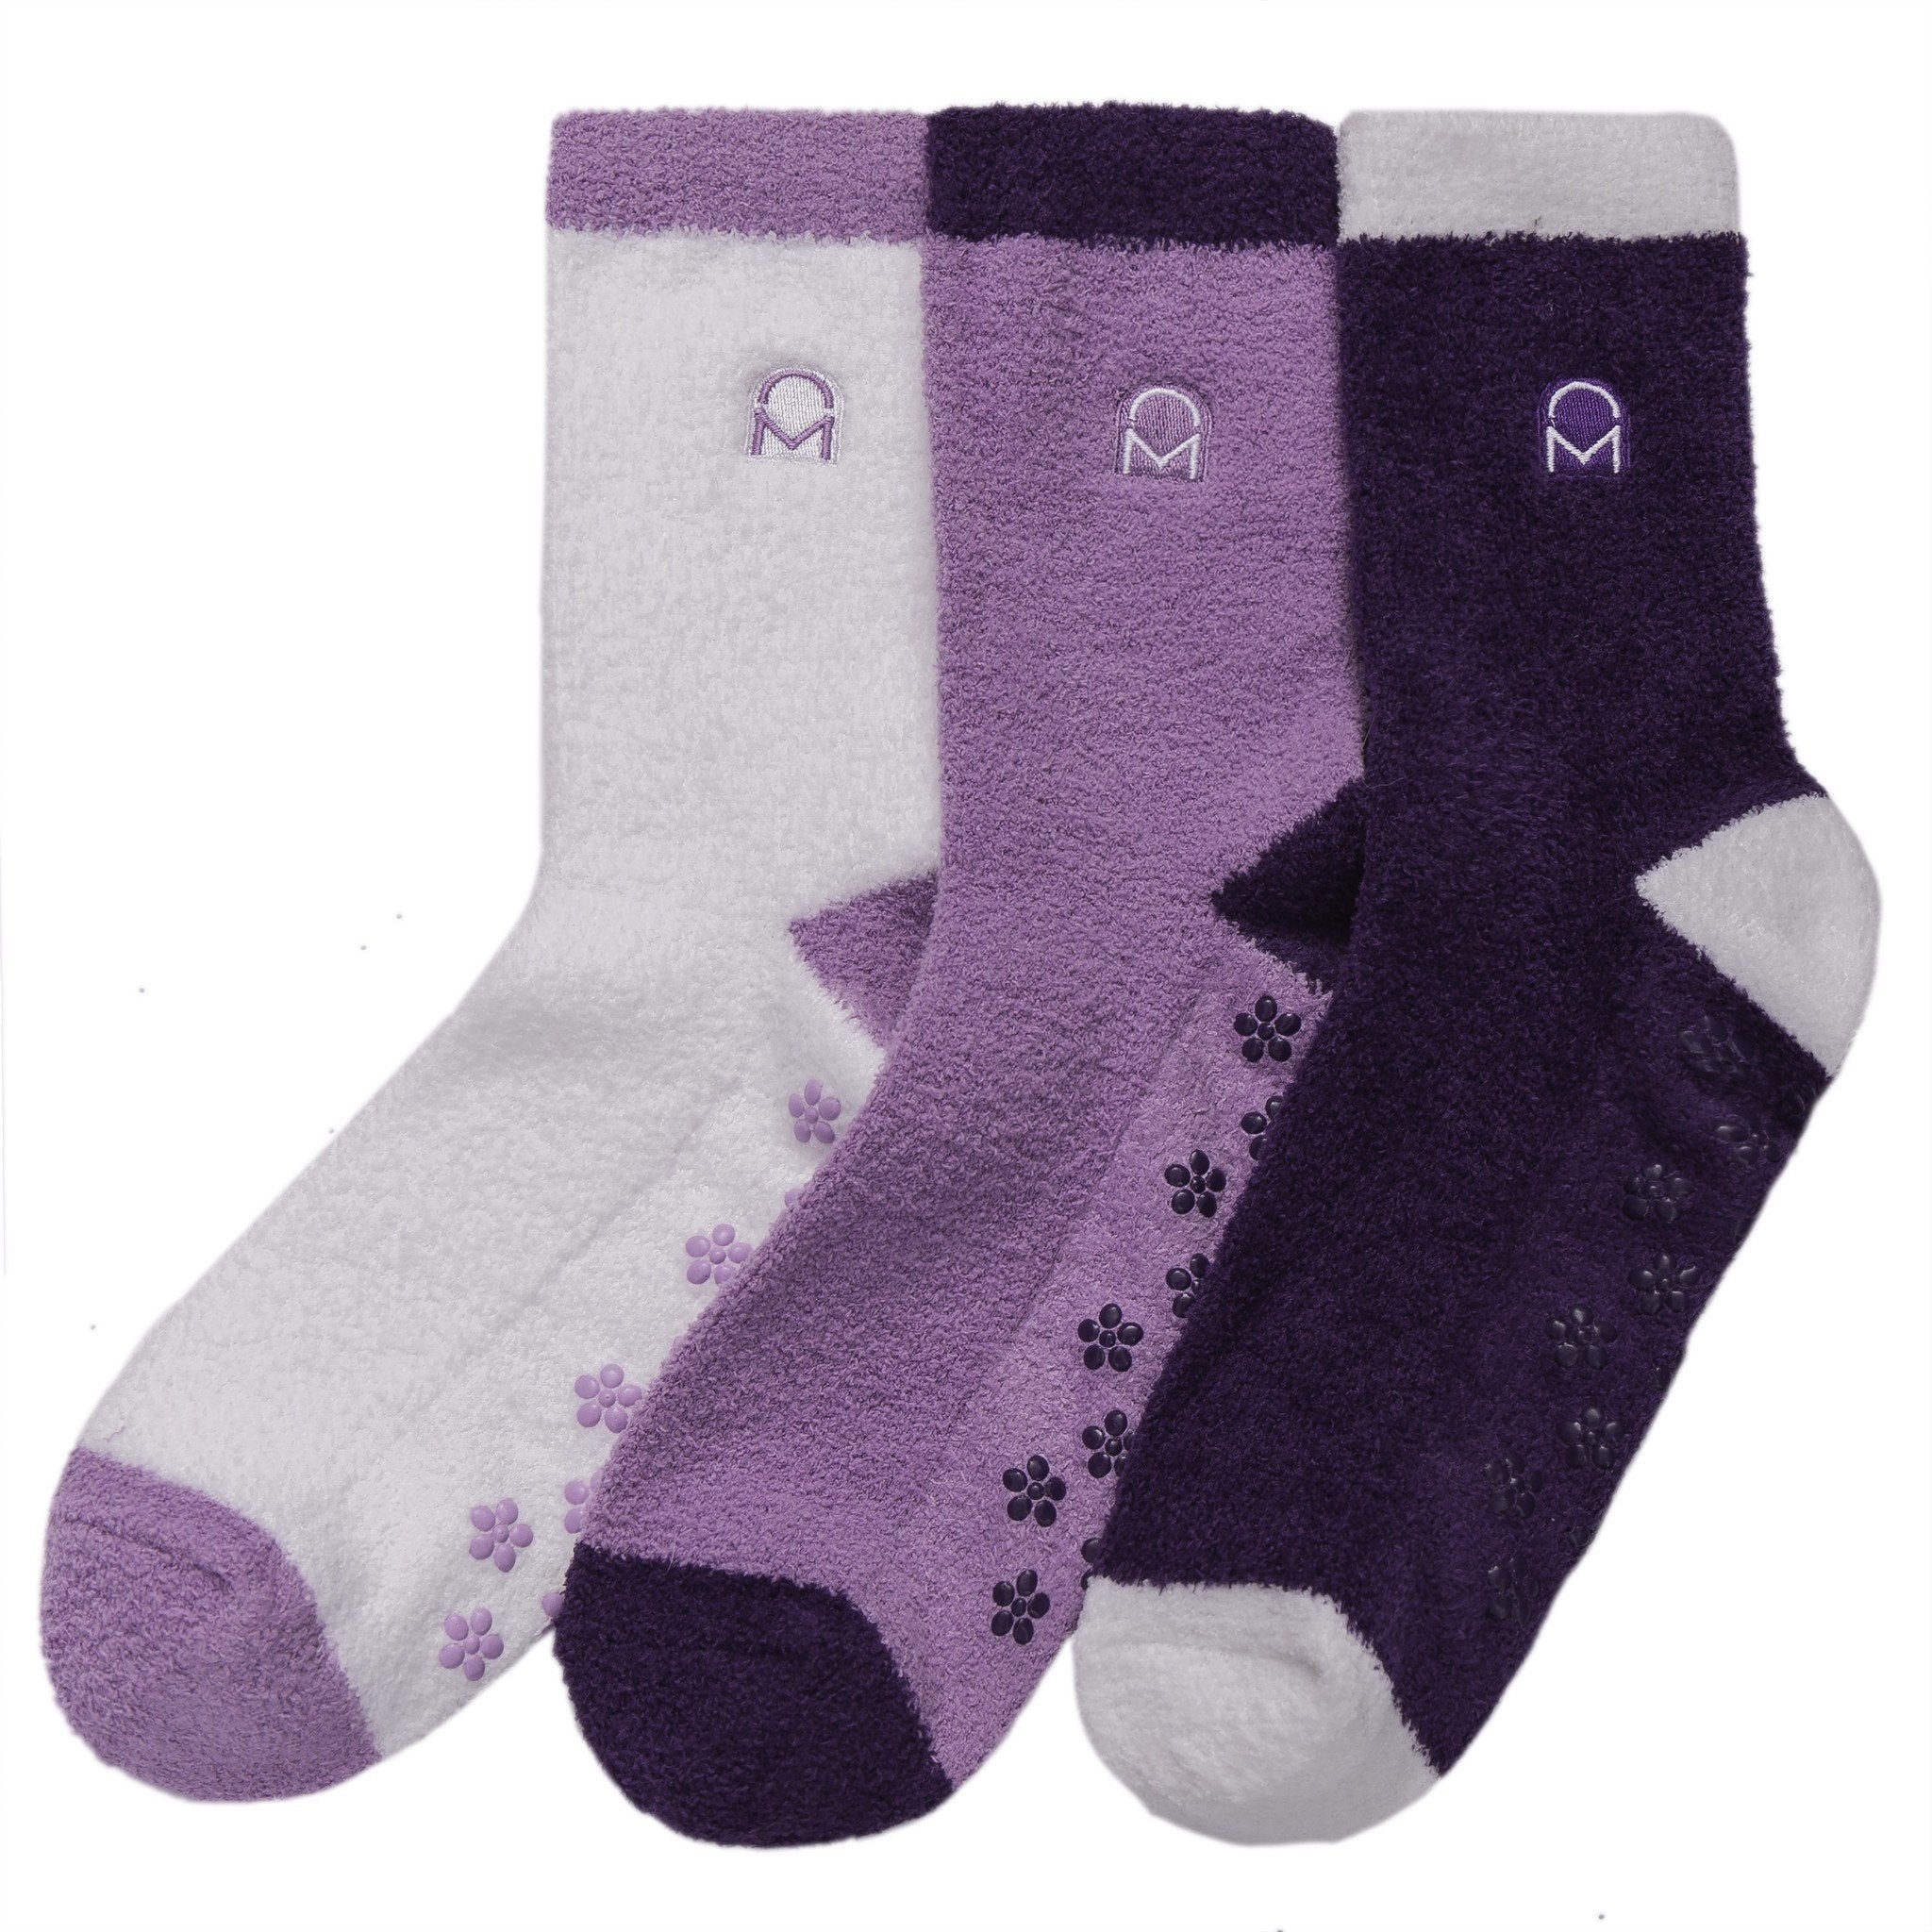 Women's Soft Anti-Skid Micro-Plush Winter Crew Socks - Set C10